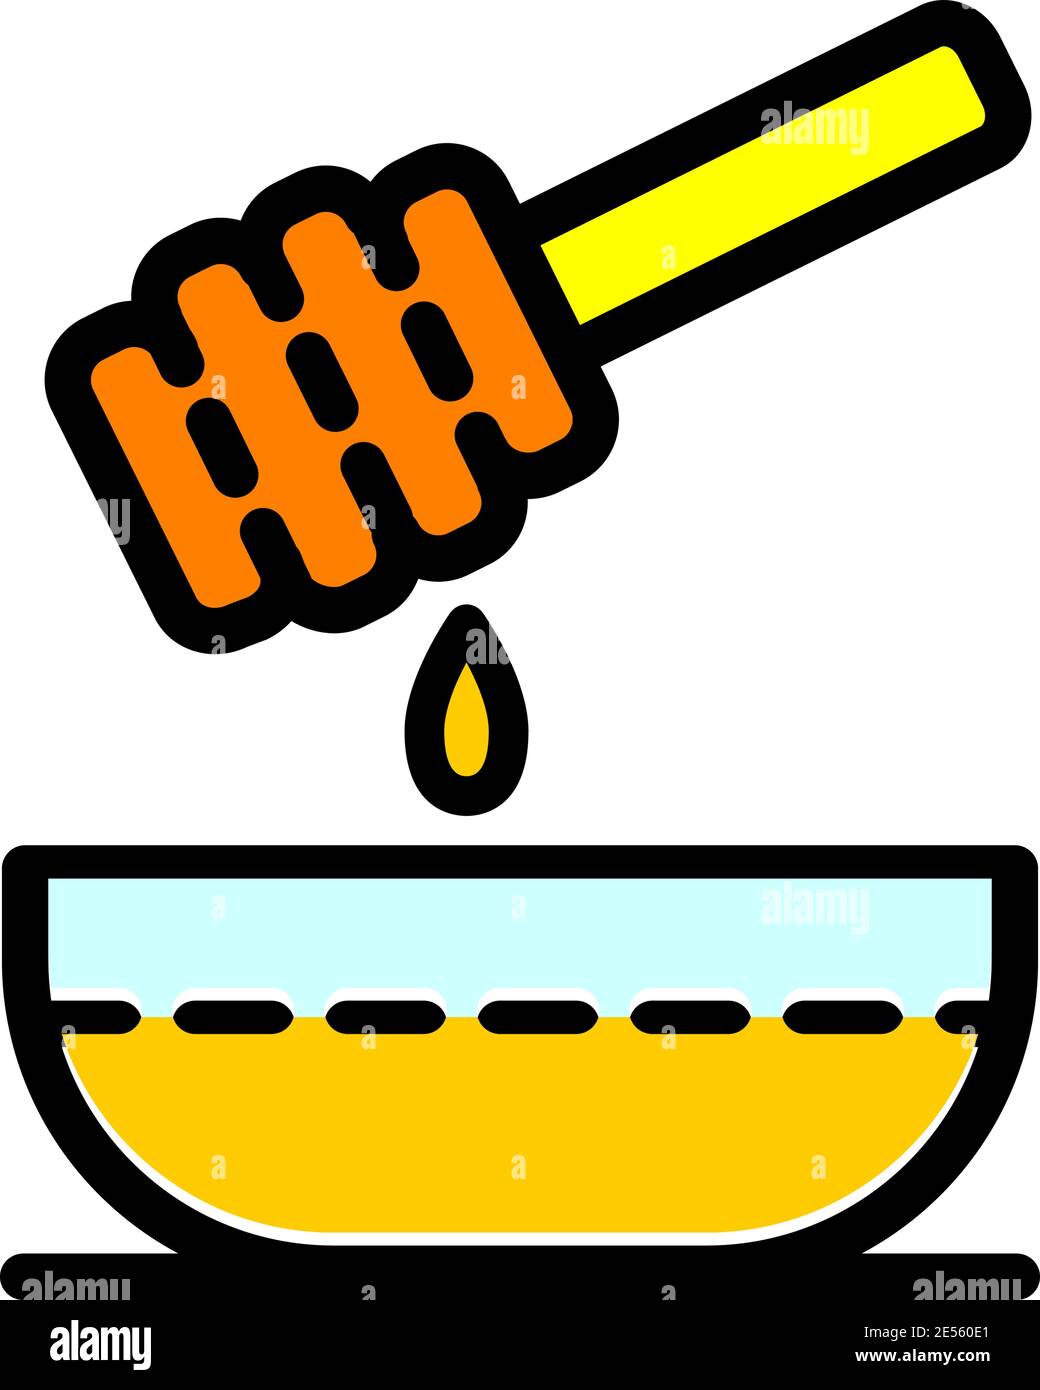 honey simple dripper icon logo Stock Vector